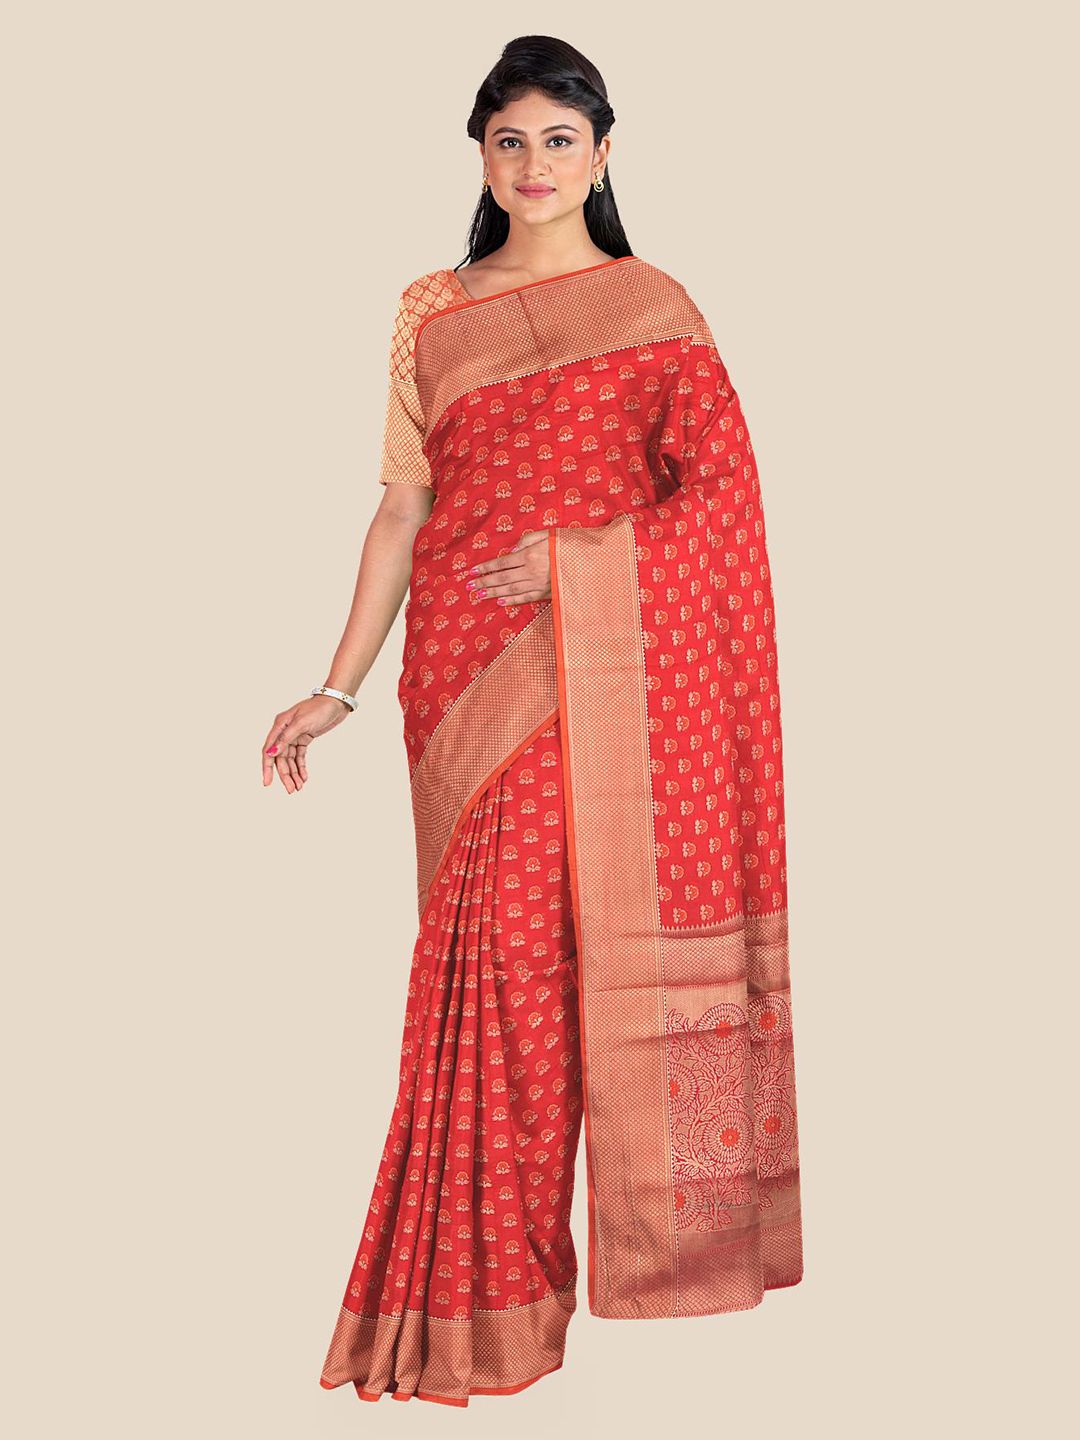 Kalamandir Red Floral Zari Silk Blend Saree Price in India